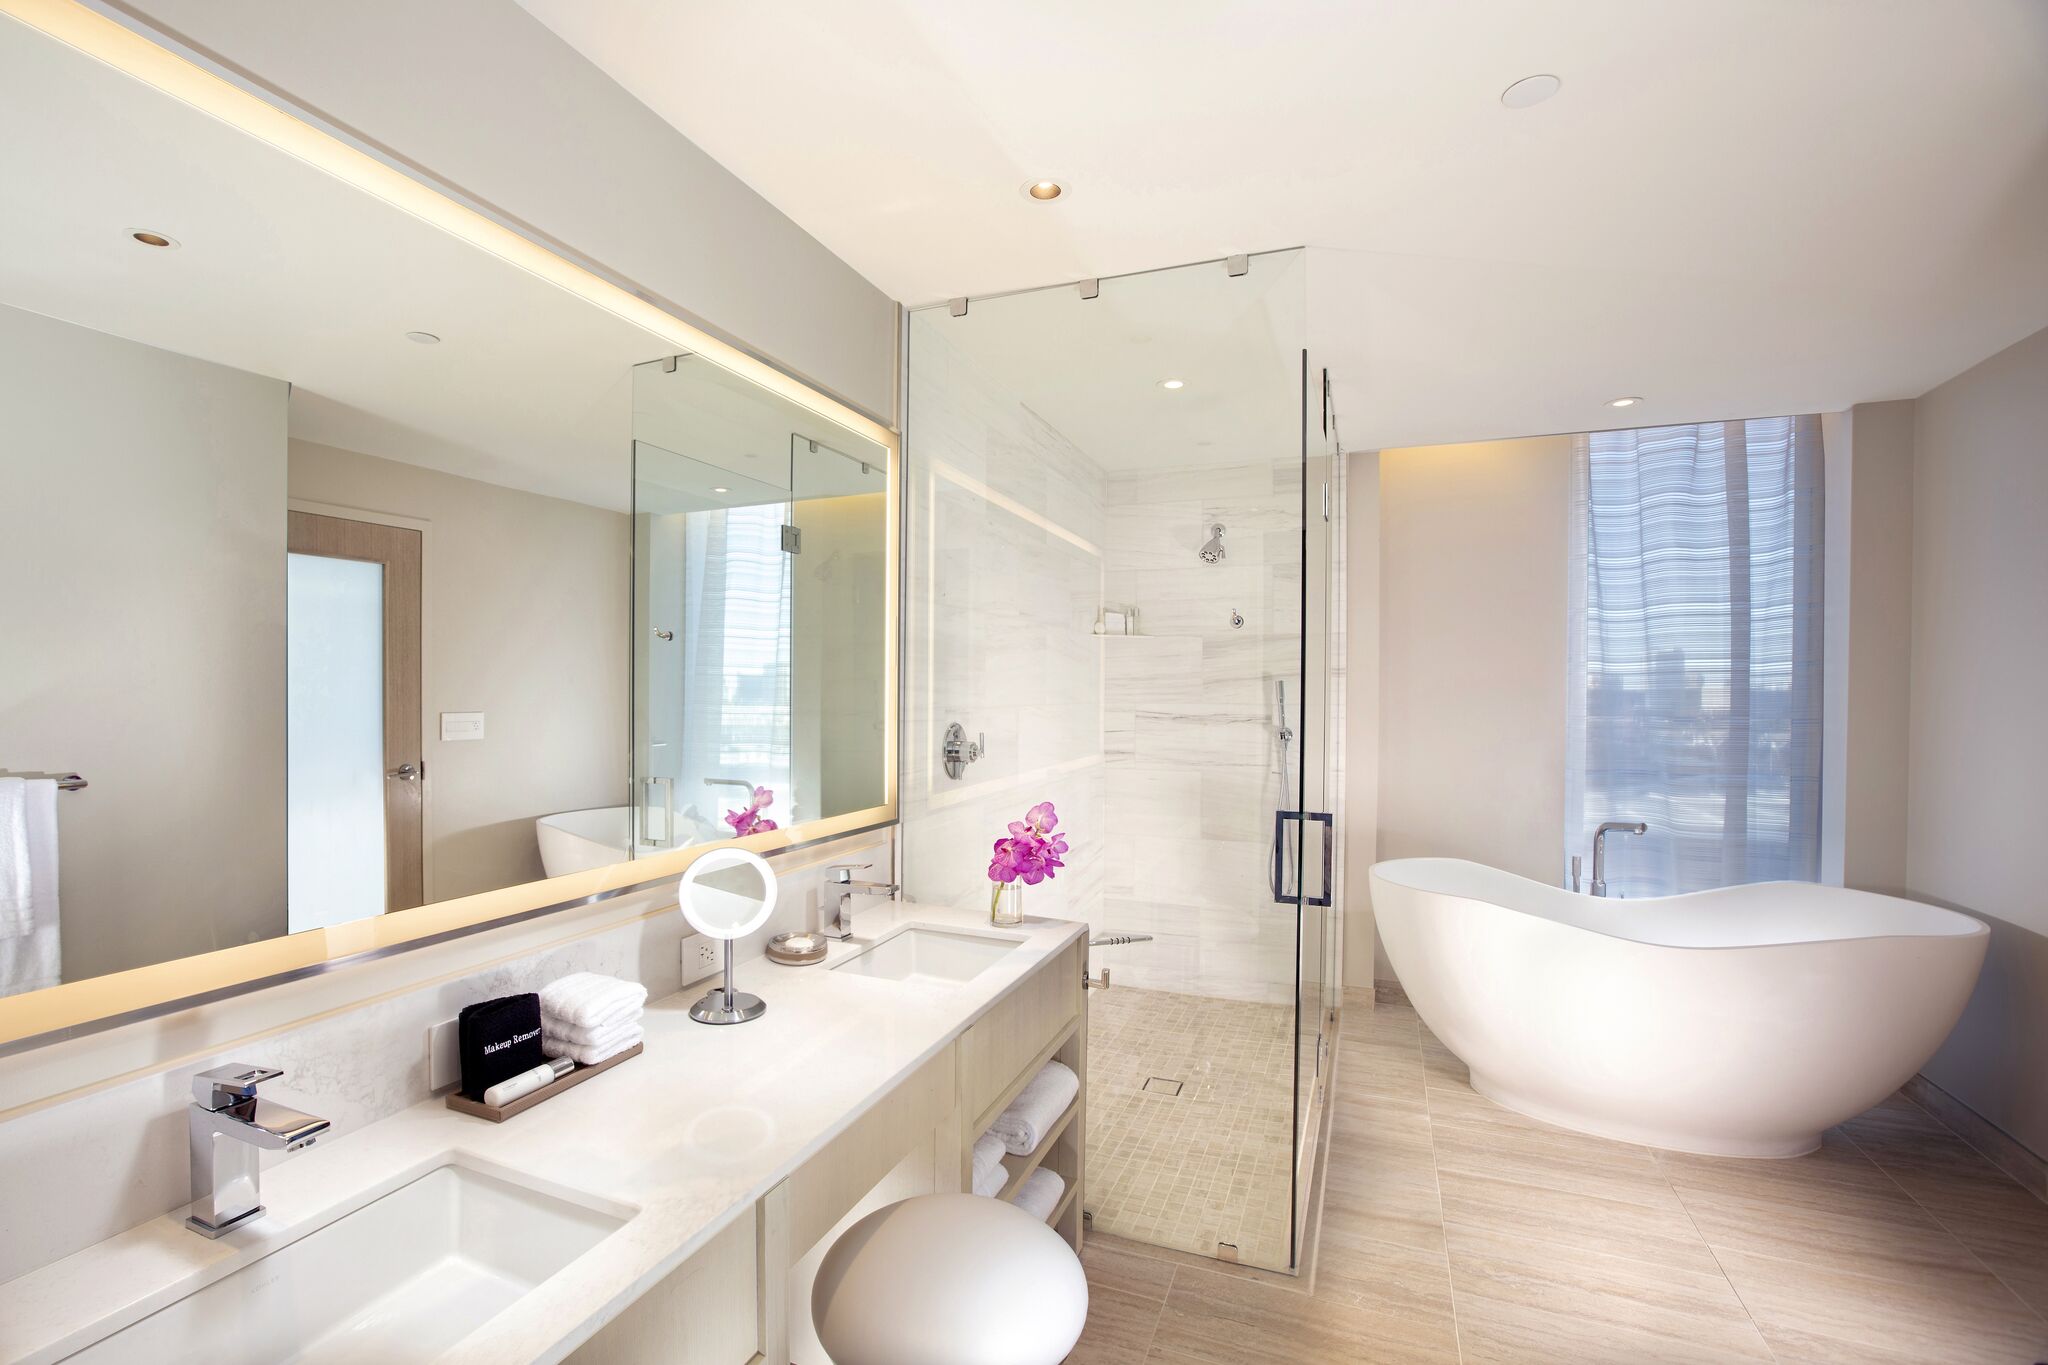 16 Stunning Hotel Bathrooms